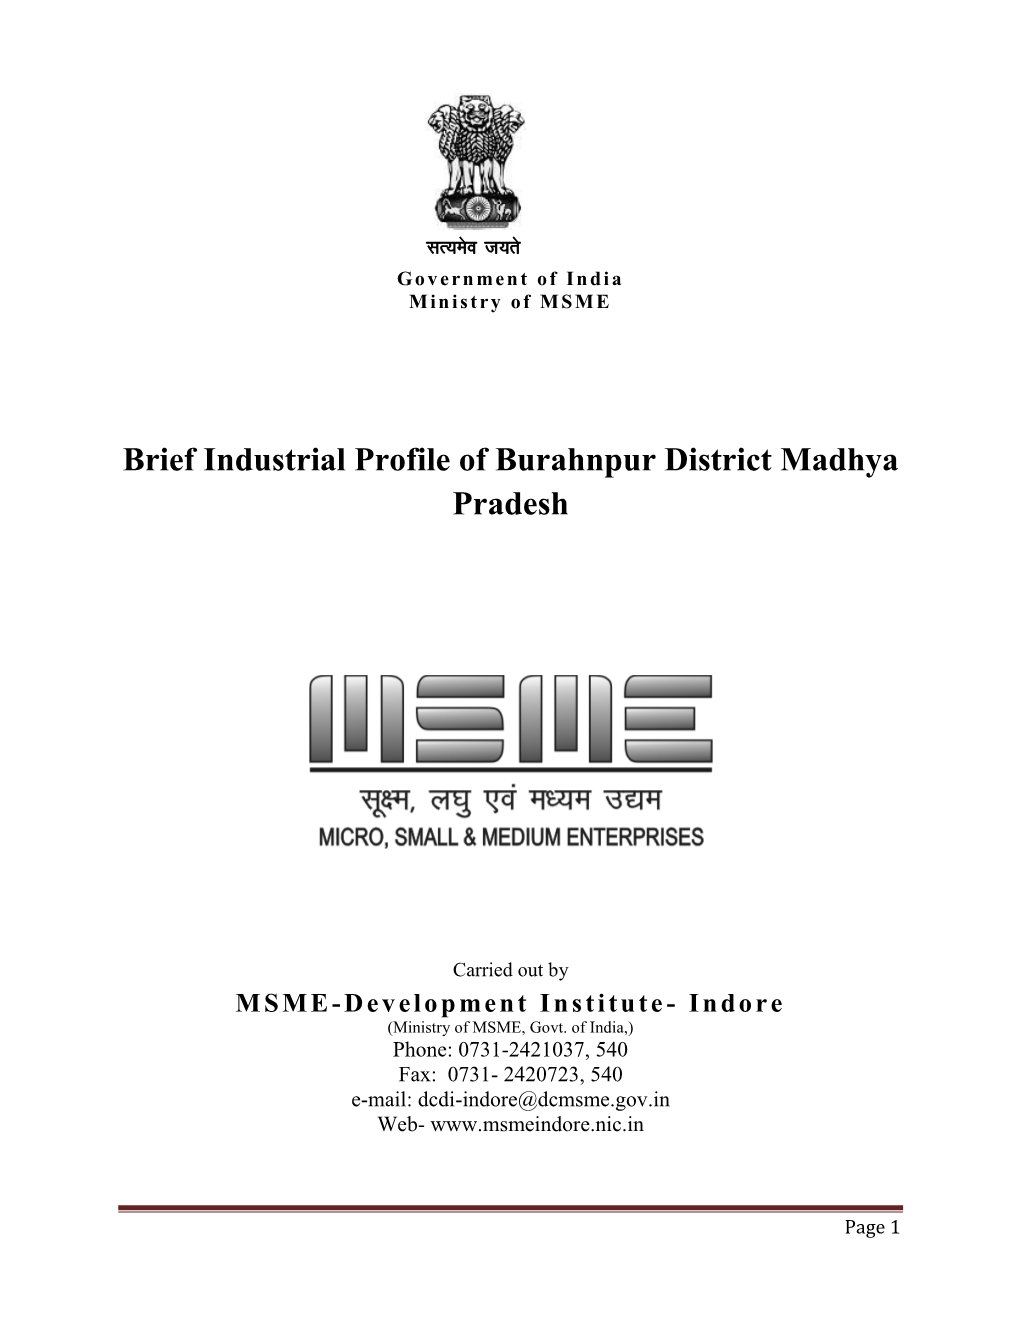 Brief Industrial Profile of Burahnpur District Madhya Pradesh